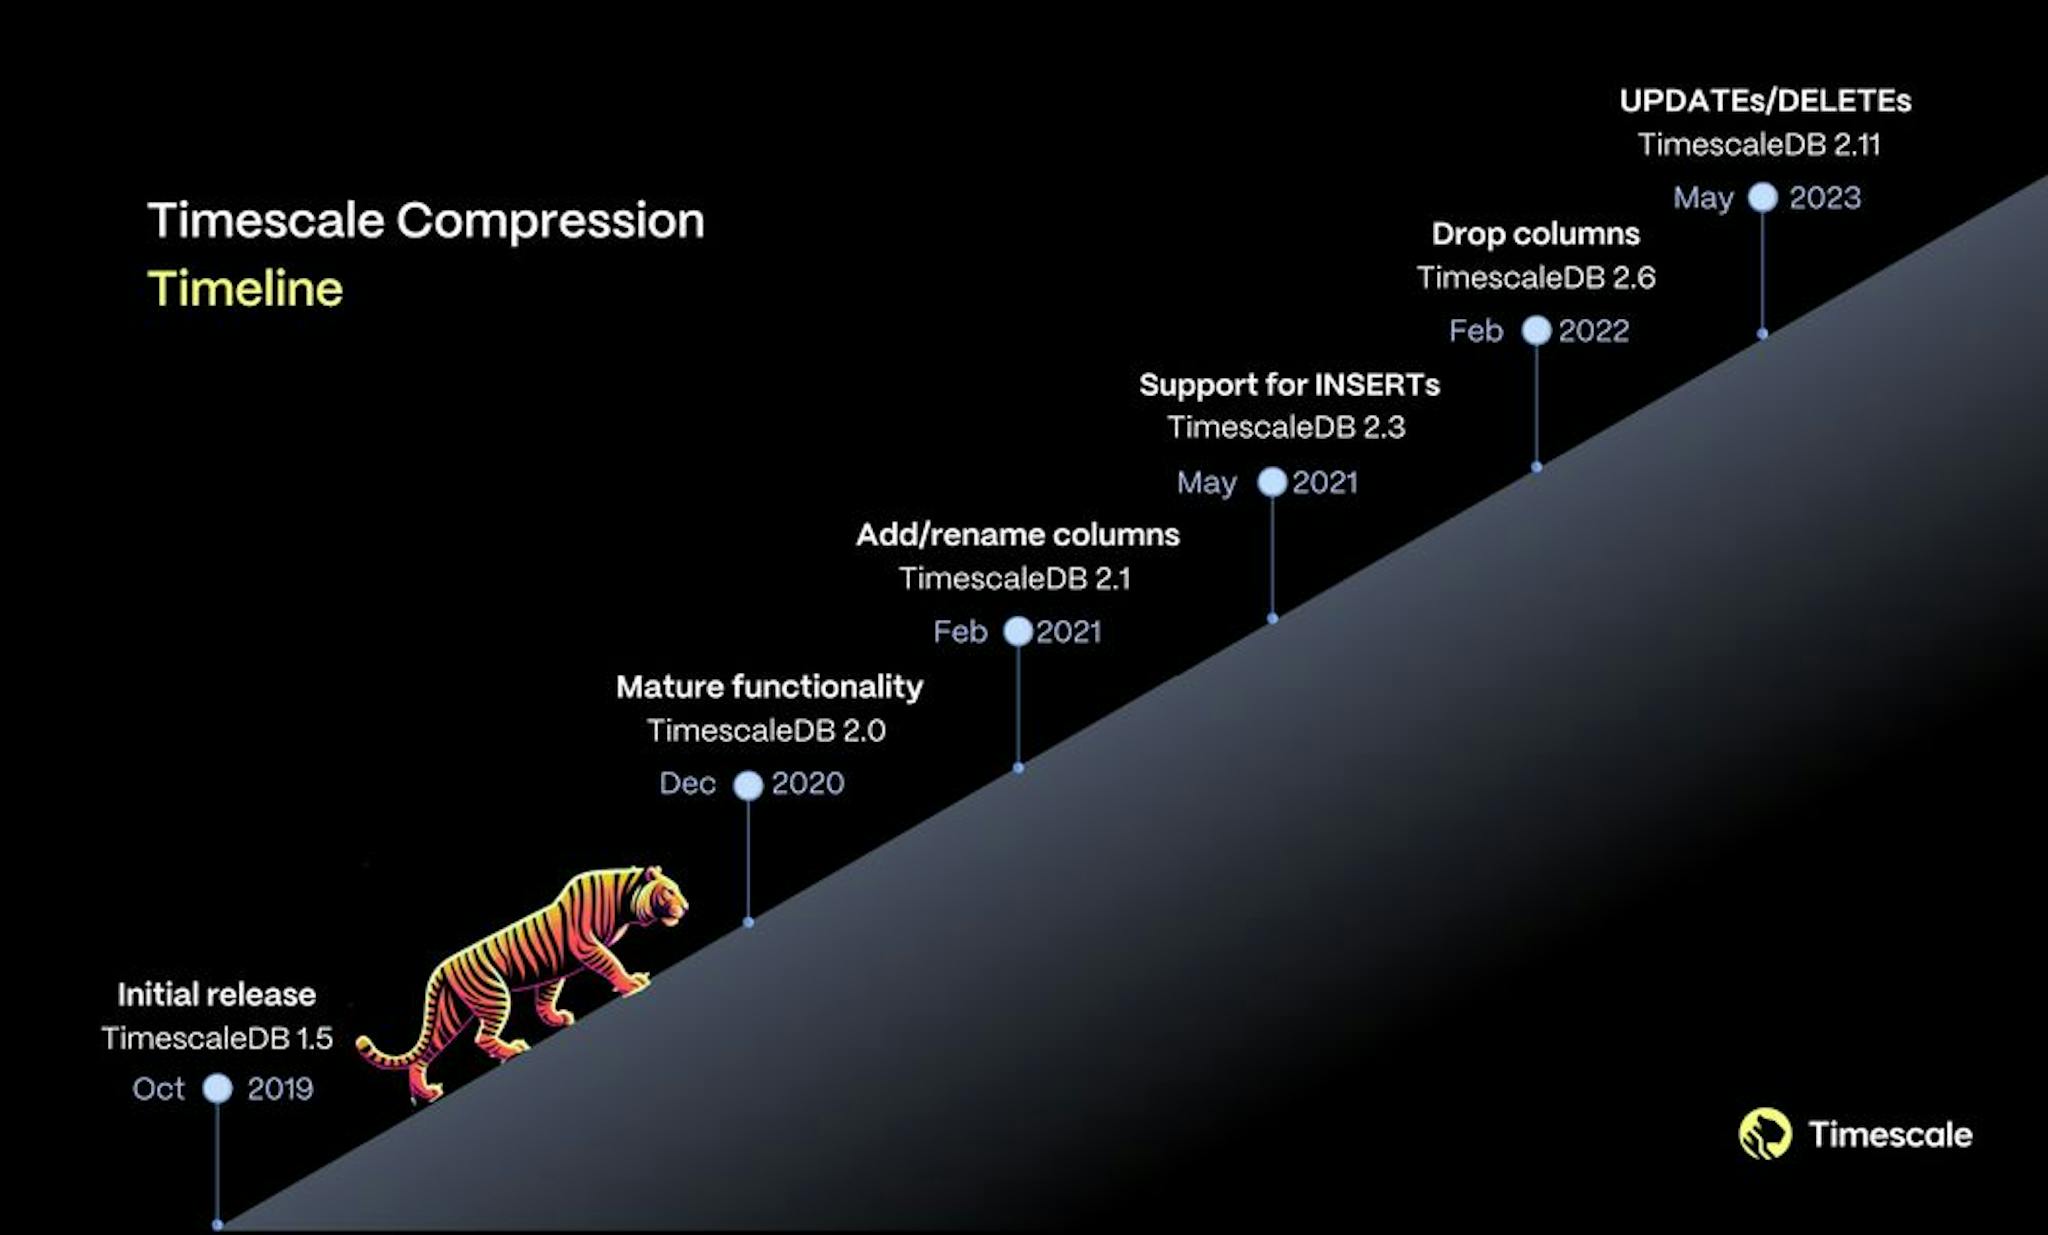 The evolution of Timescale’s compression 